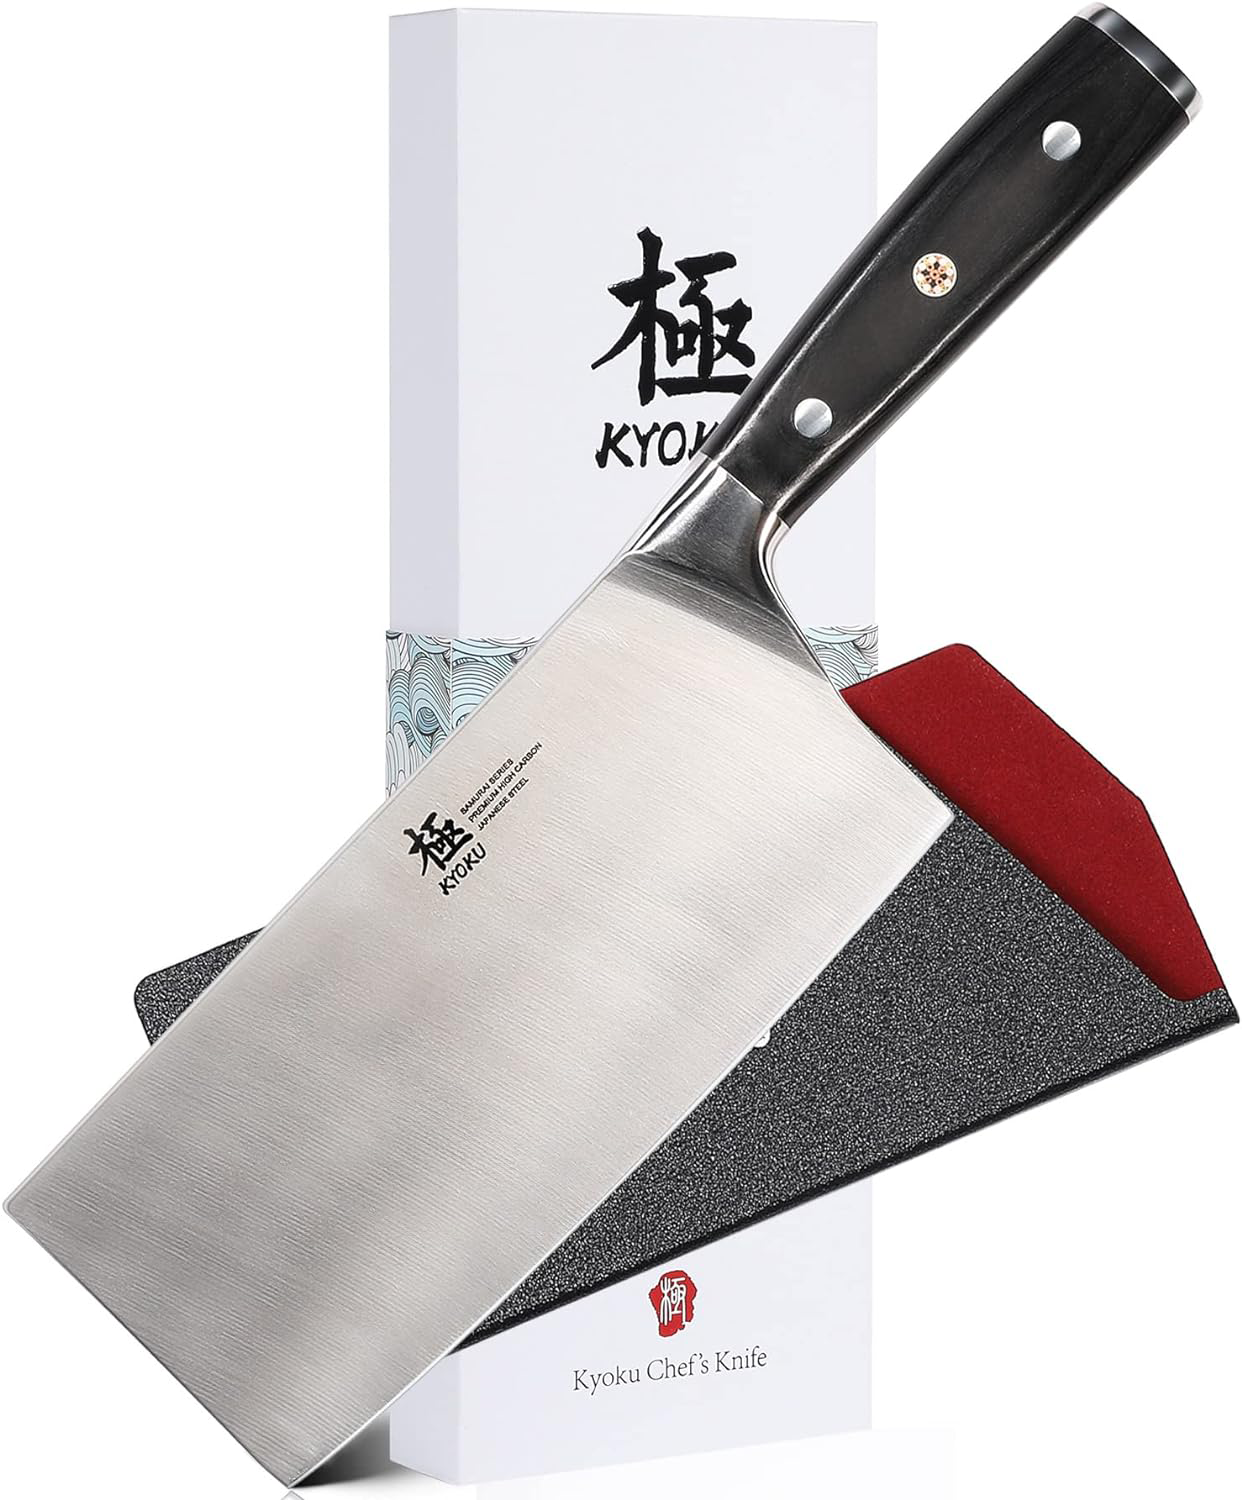 KD Japanese Cleaver Knife - 7" Samurai Series - Full Tang - Pakkawood Handle with Mosaic Pin - Includes Sheath & Case